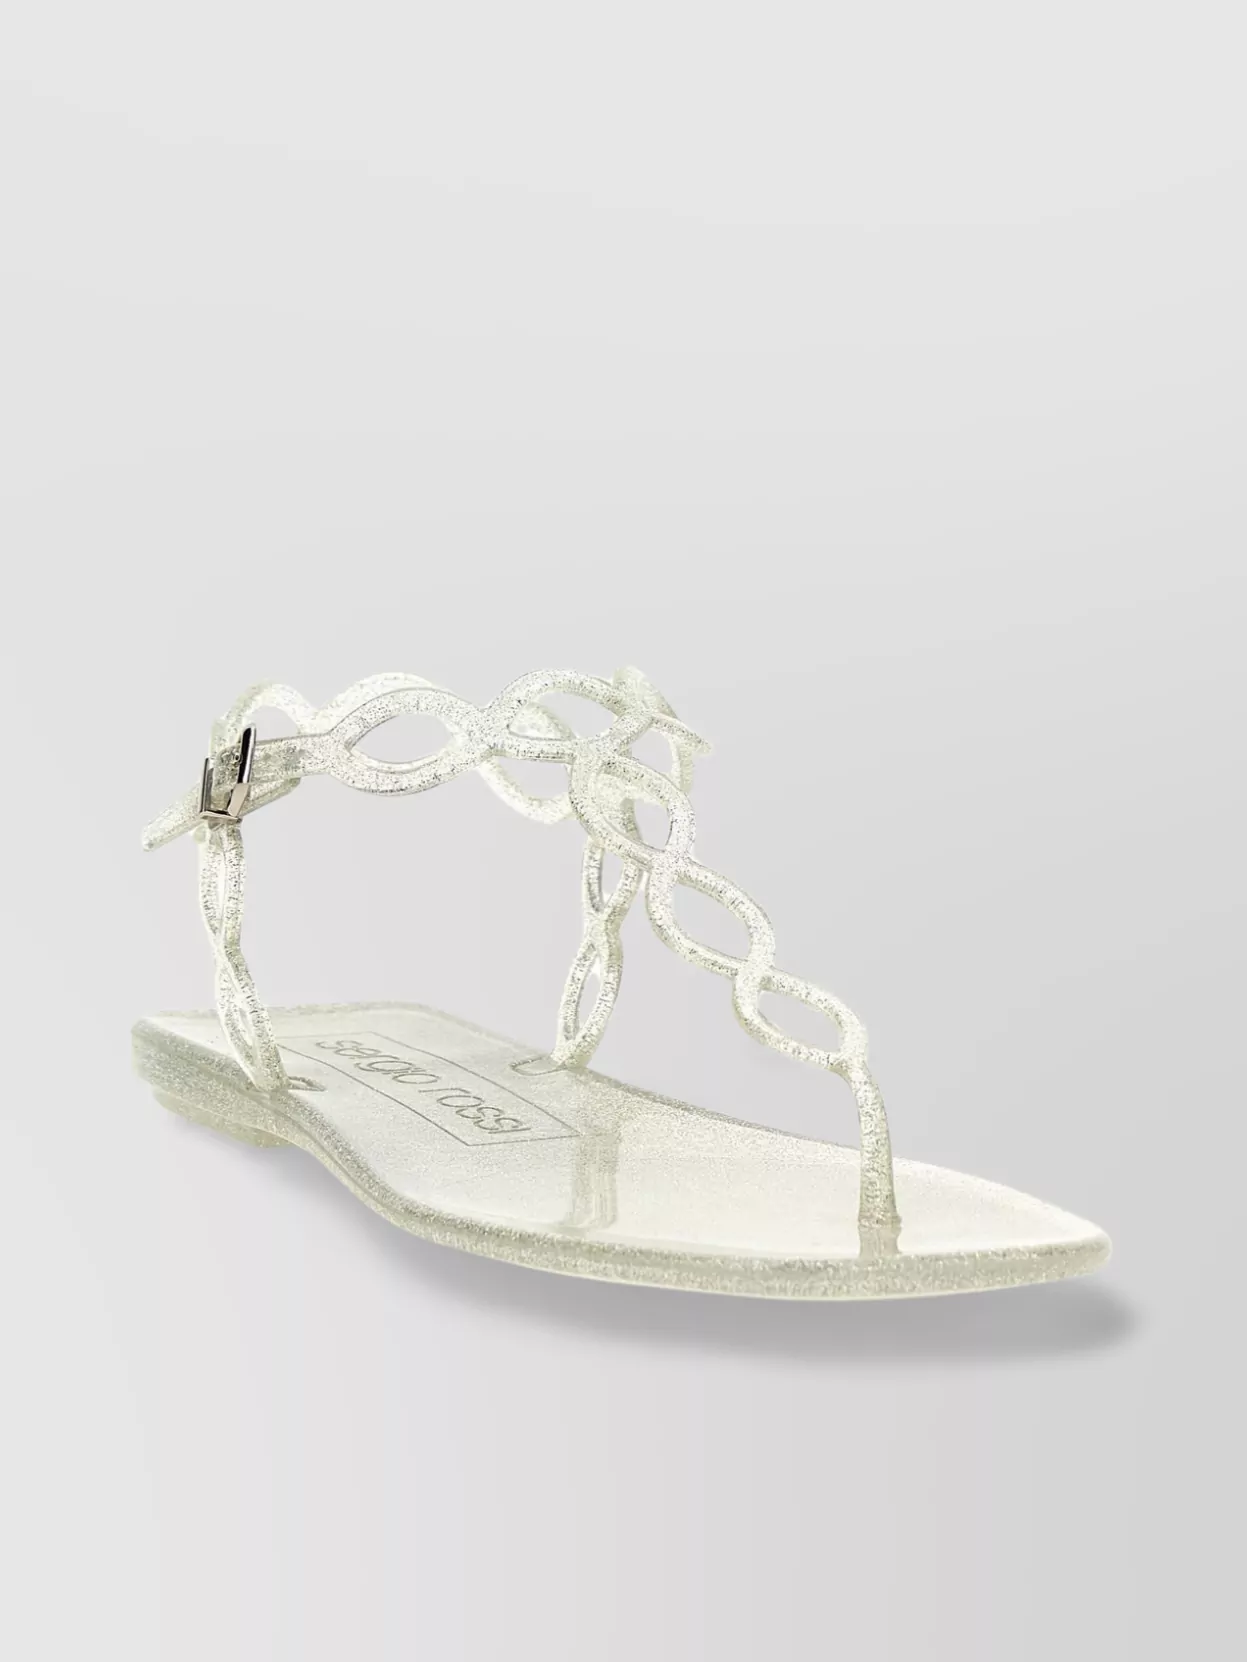 Sergio Rossi "siren" Flat Metallic Strappy Sandals In White